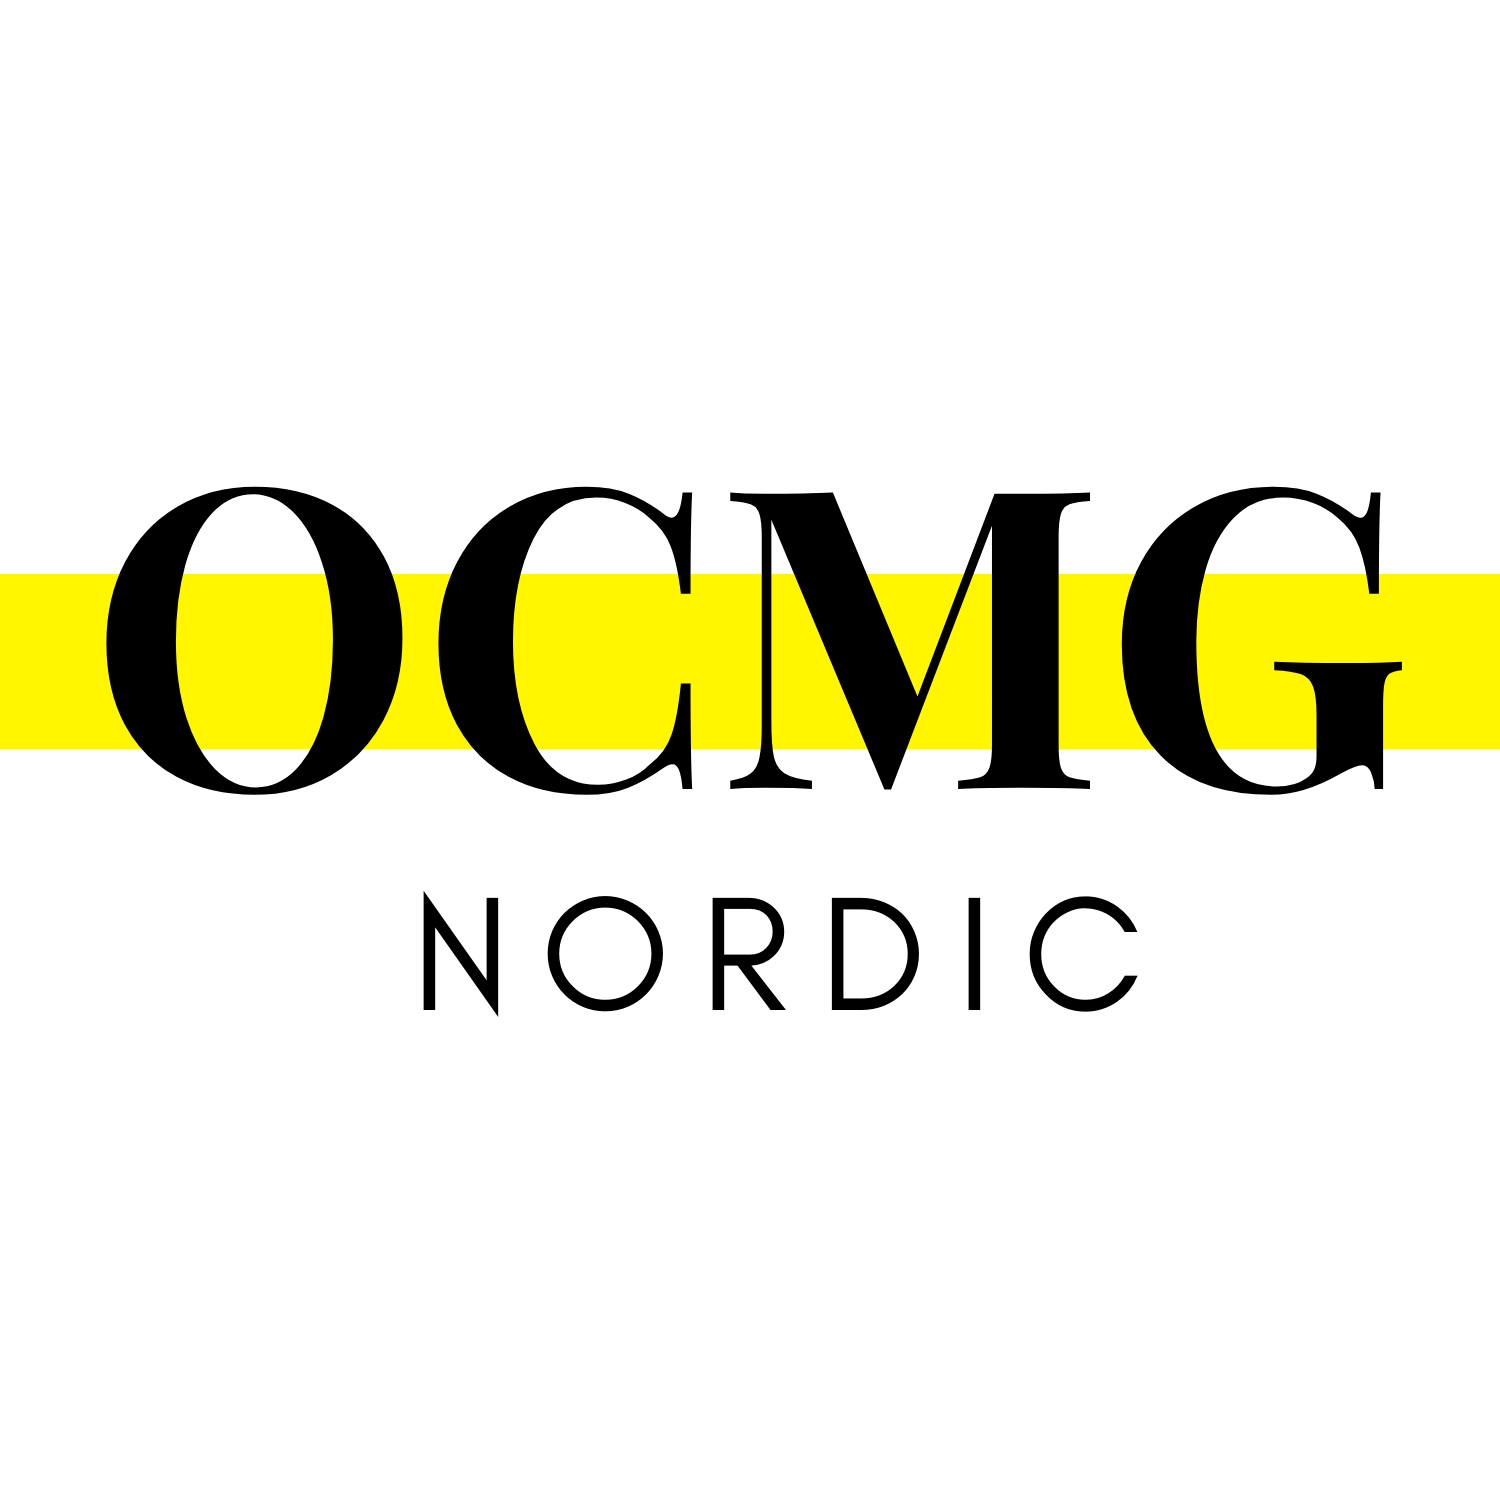 OCMG Nordic